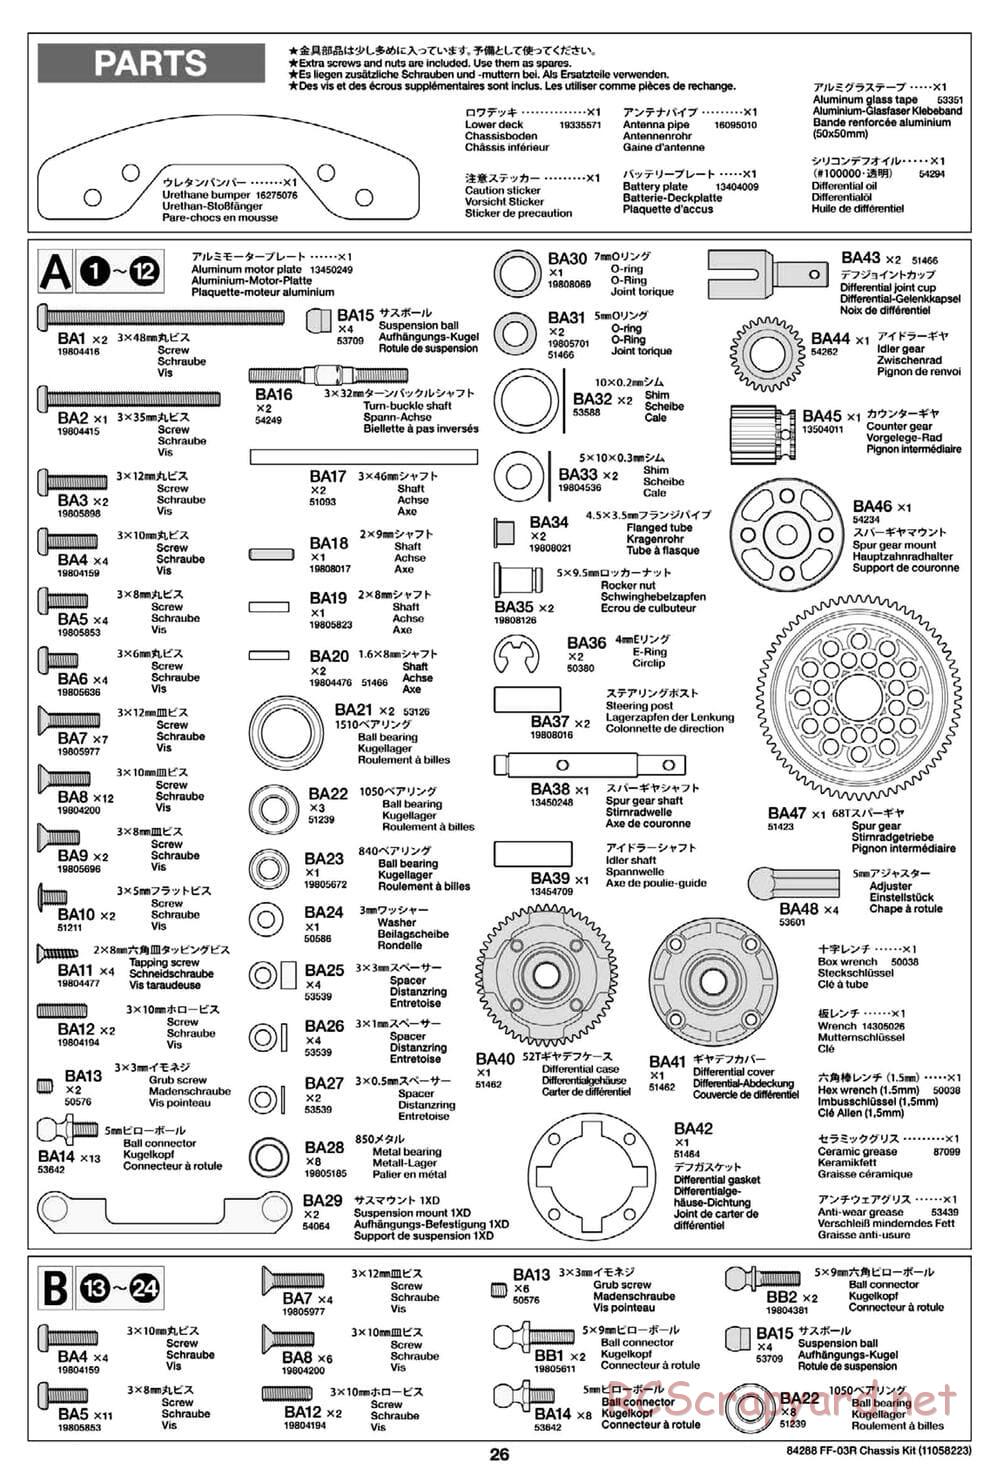 Tamiya - FF-03R Chassis - Manual - Page 28